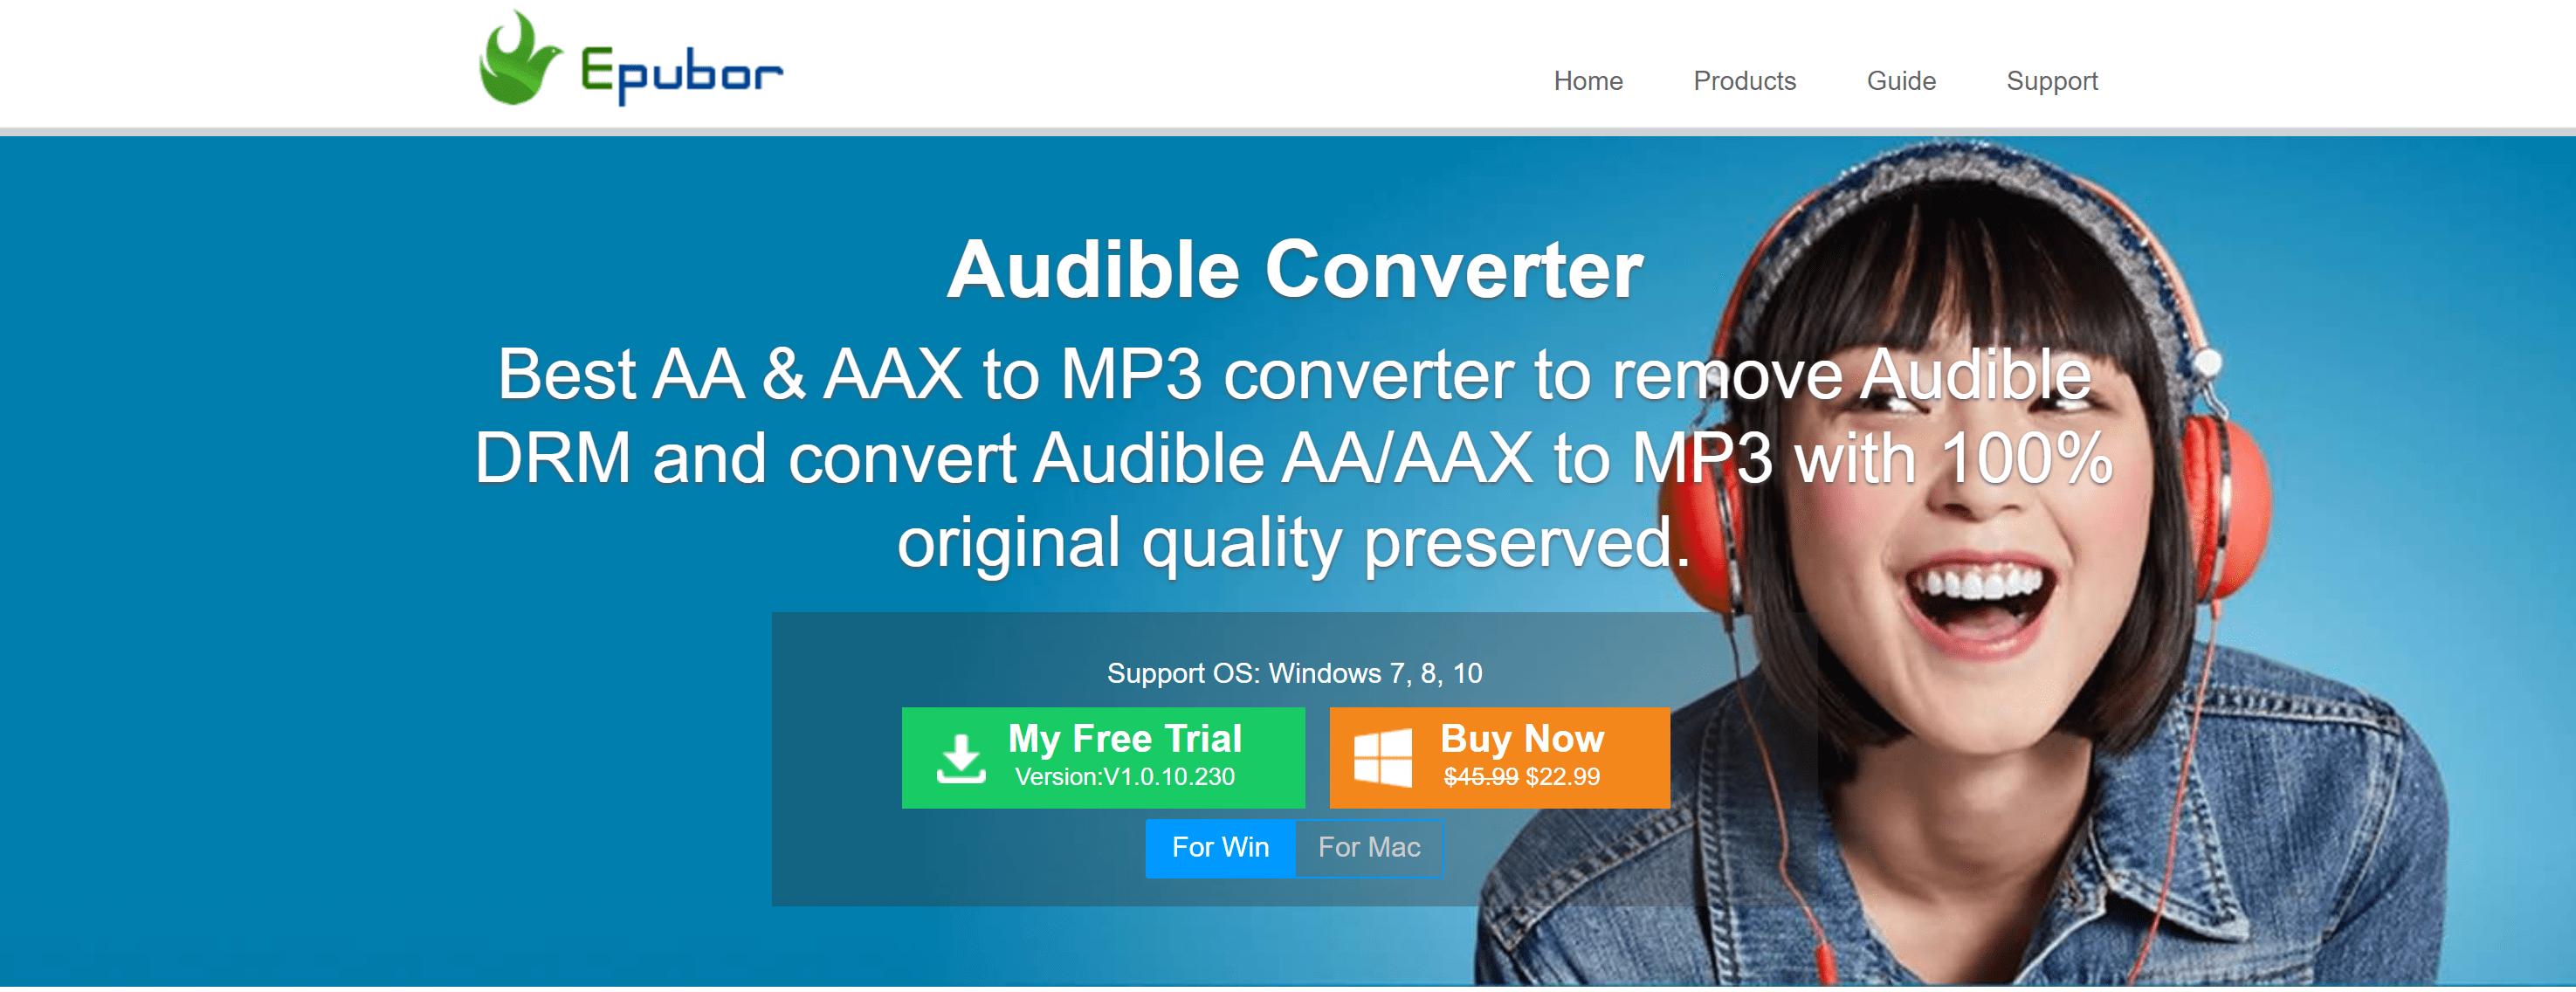 epubor audible converter review